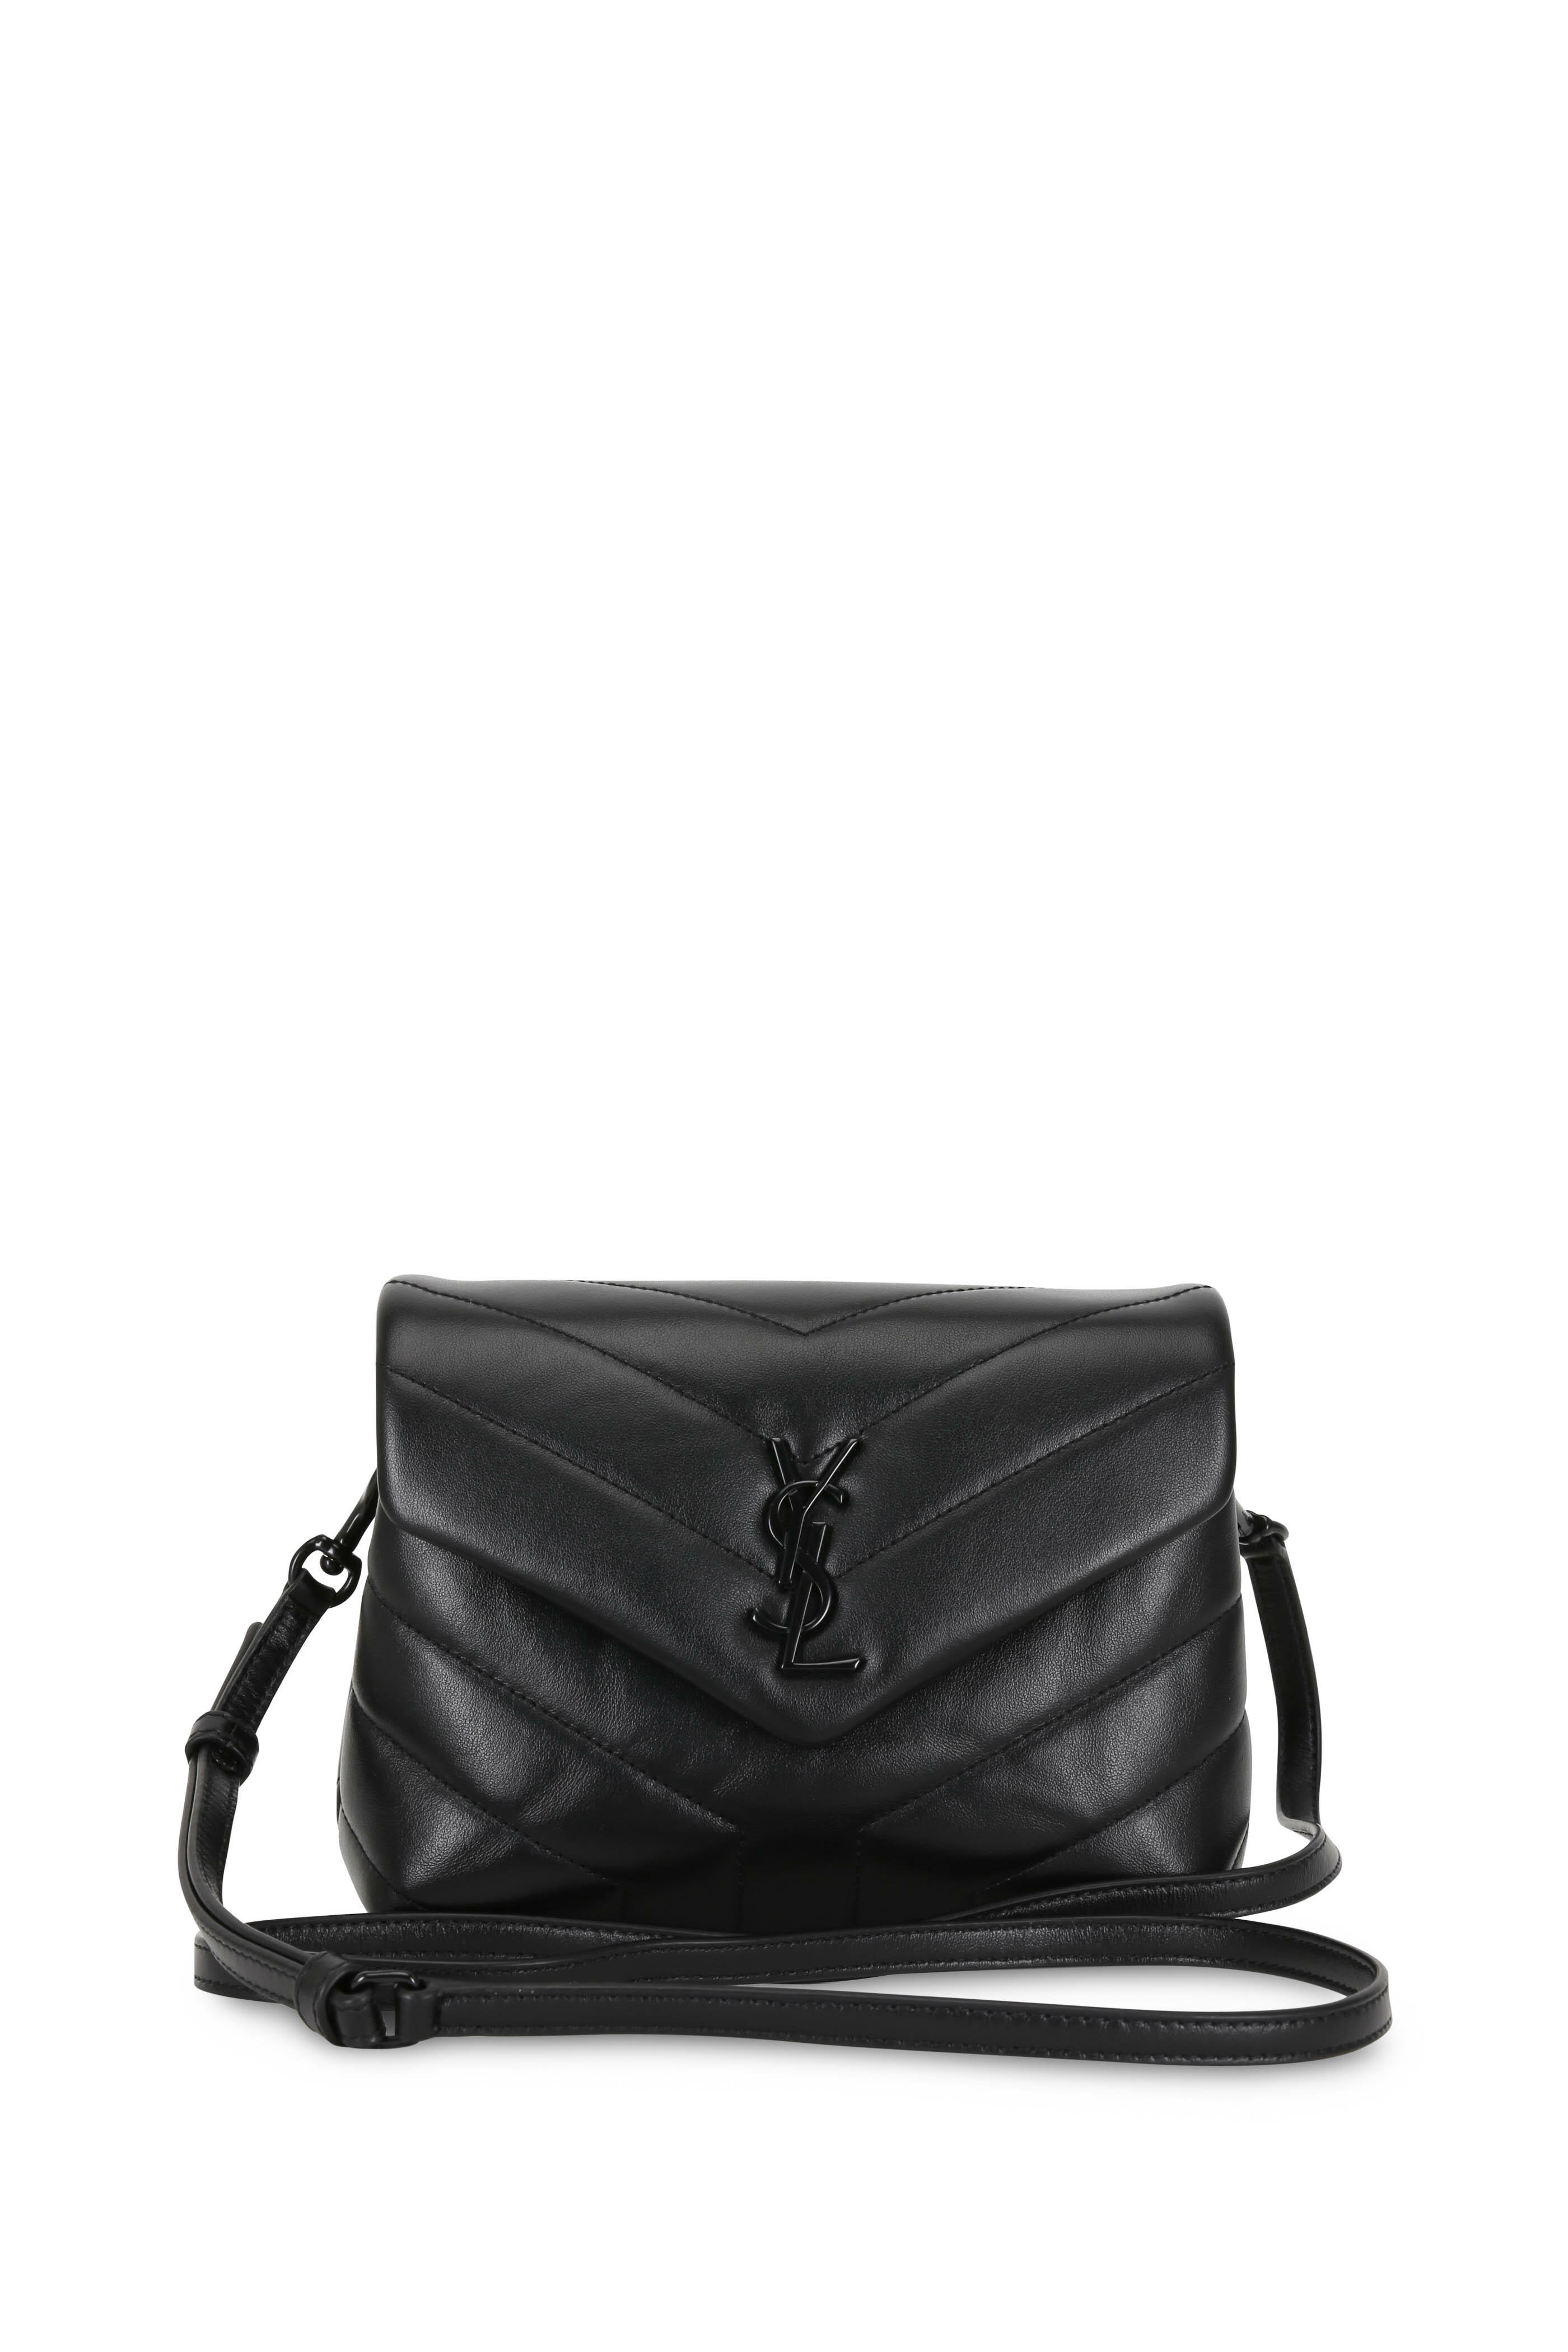 SAINT LAURENT: Toy Loulou bag in quilted leather - Black  Saint Laurent  mini bag 678401DV707 online at